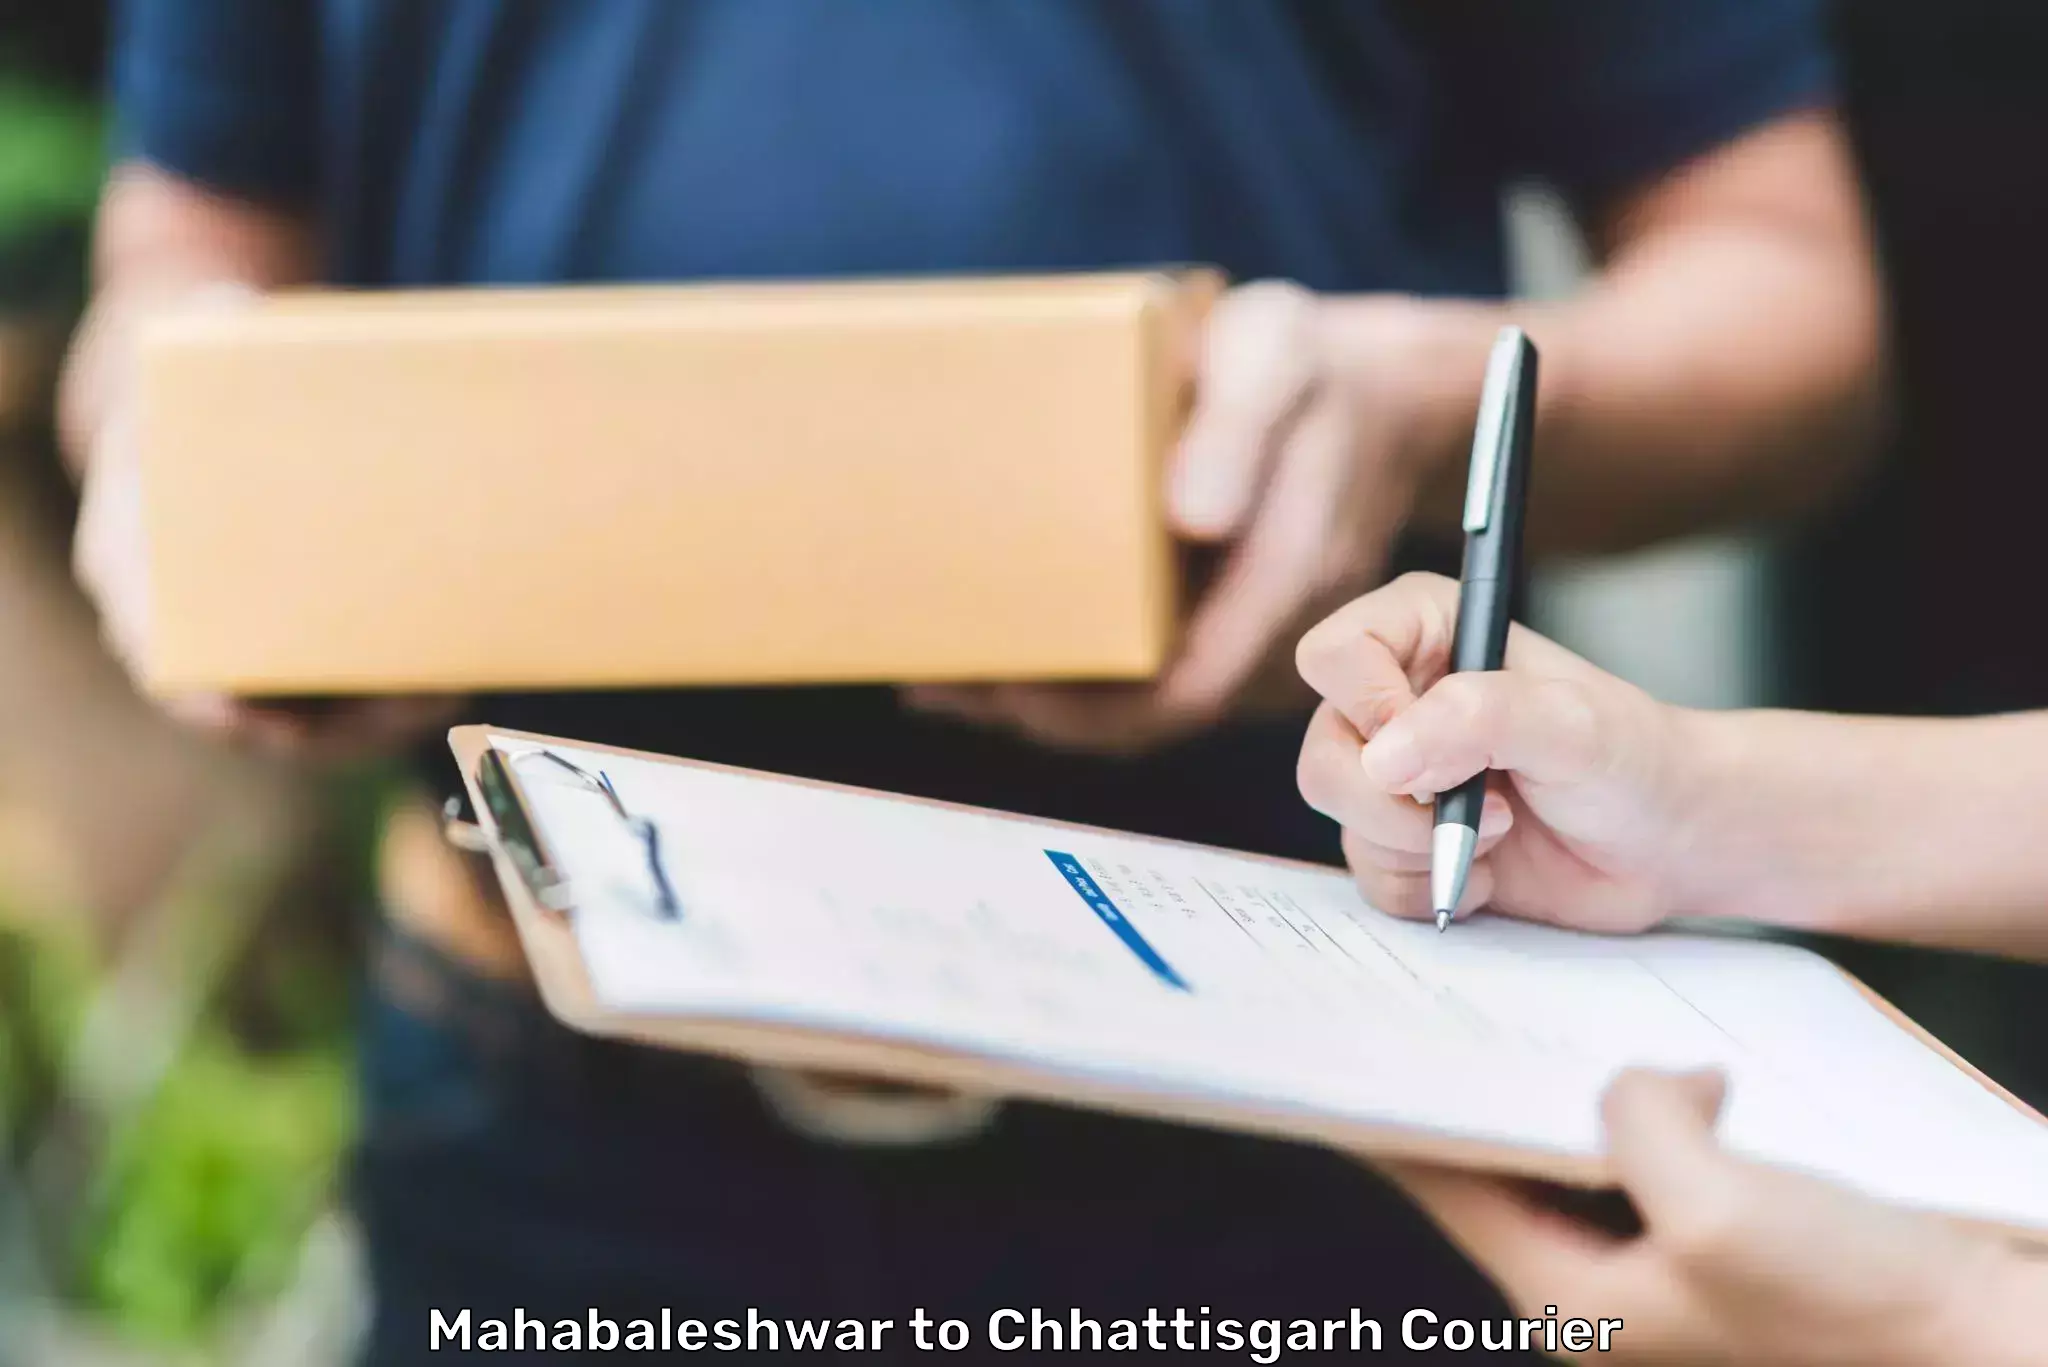 Express logistics providers Mahabaleshwar to Chhattisgarh